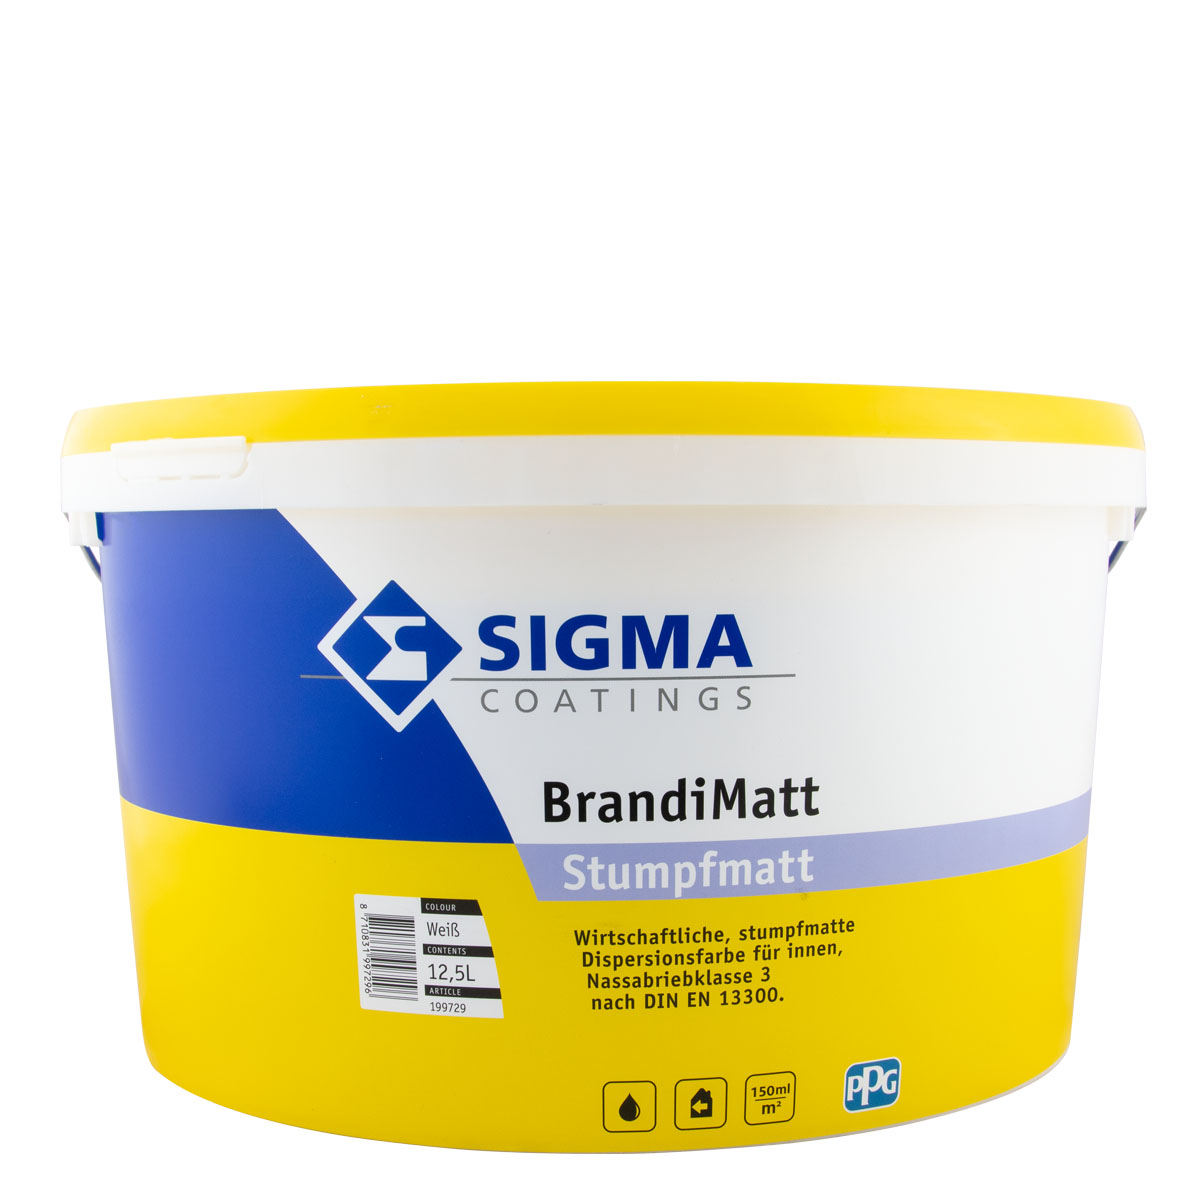 sigma_coatings_brandimatt_stumpfmatt_12,5l_gross